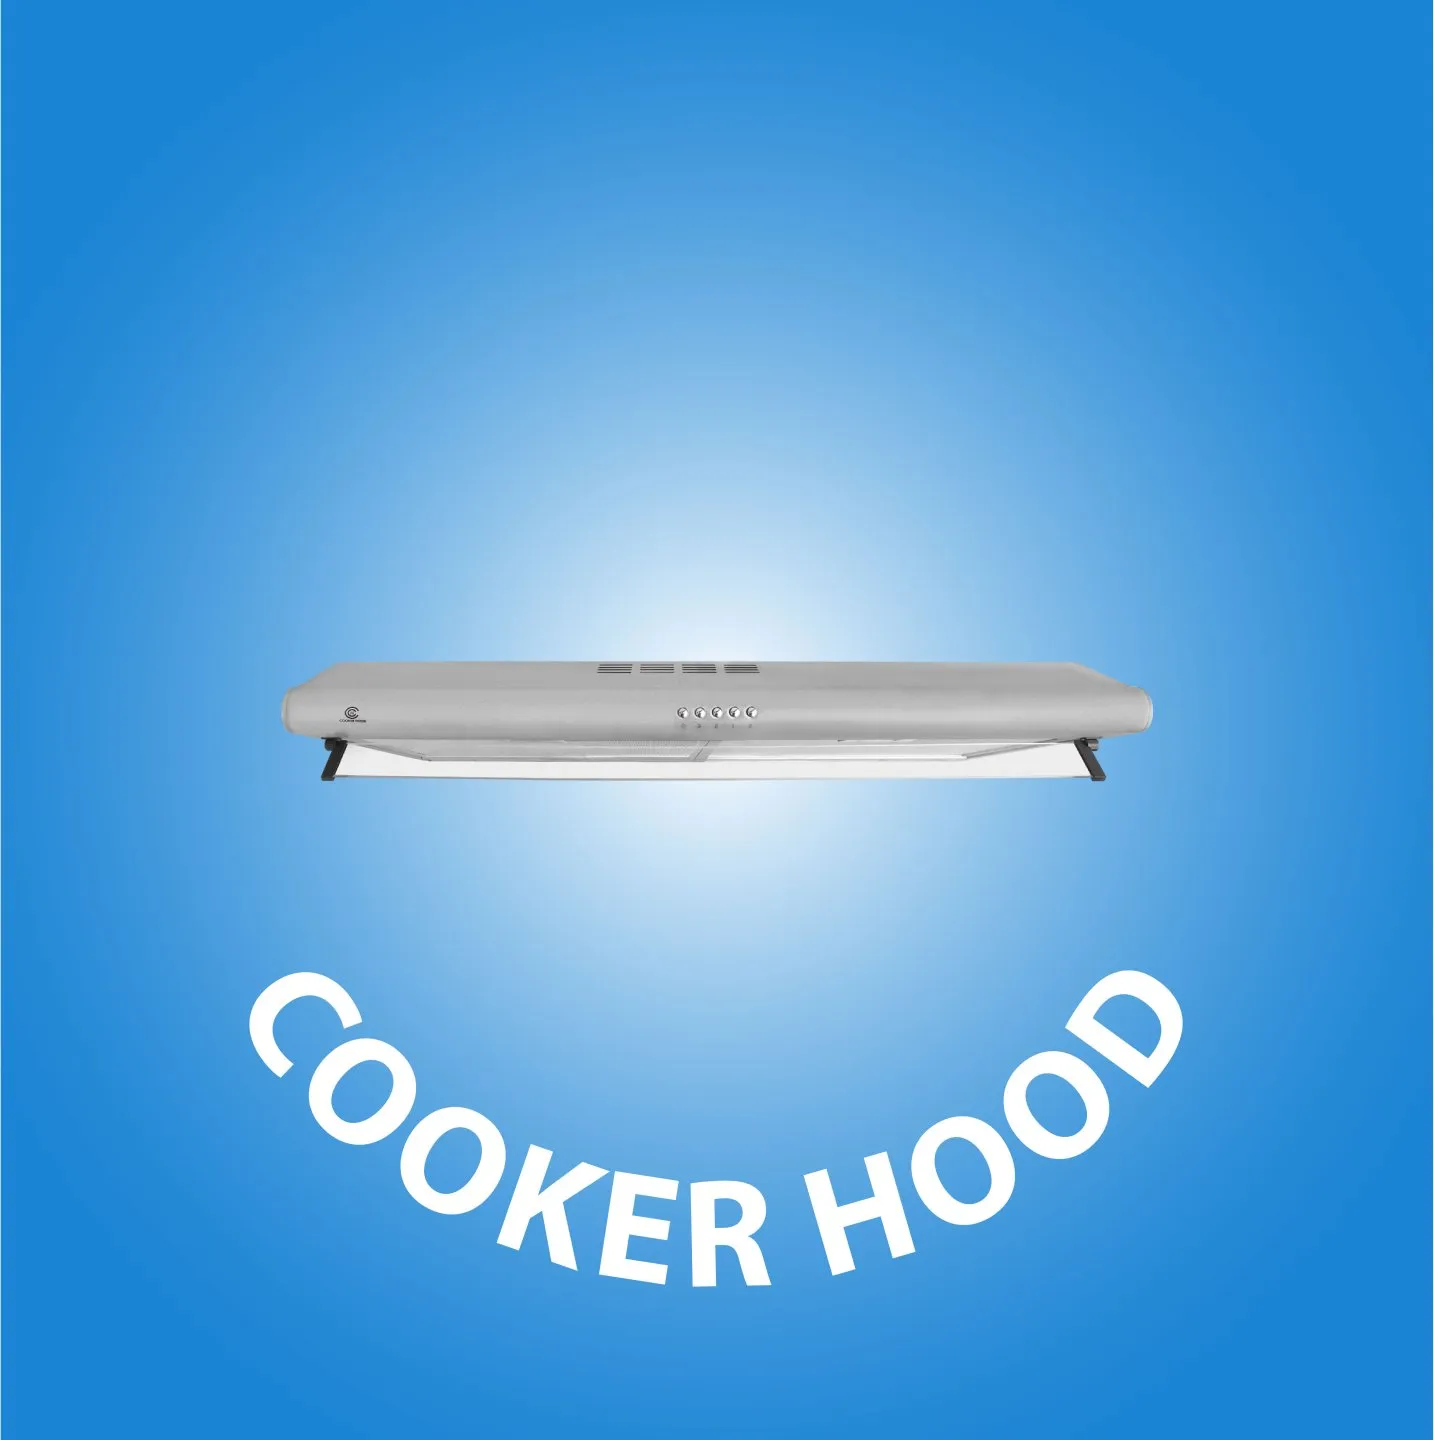  Cooker Hood cover kategori website 17